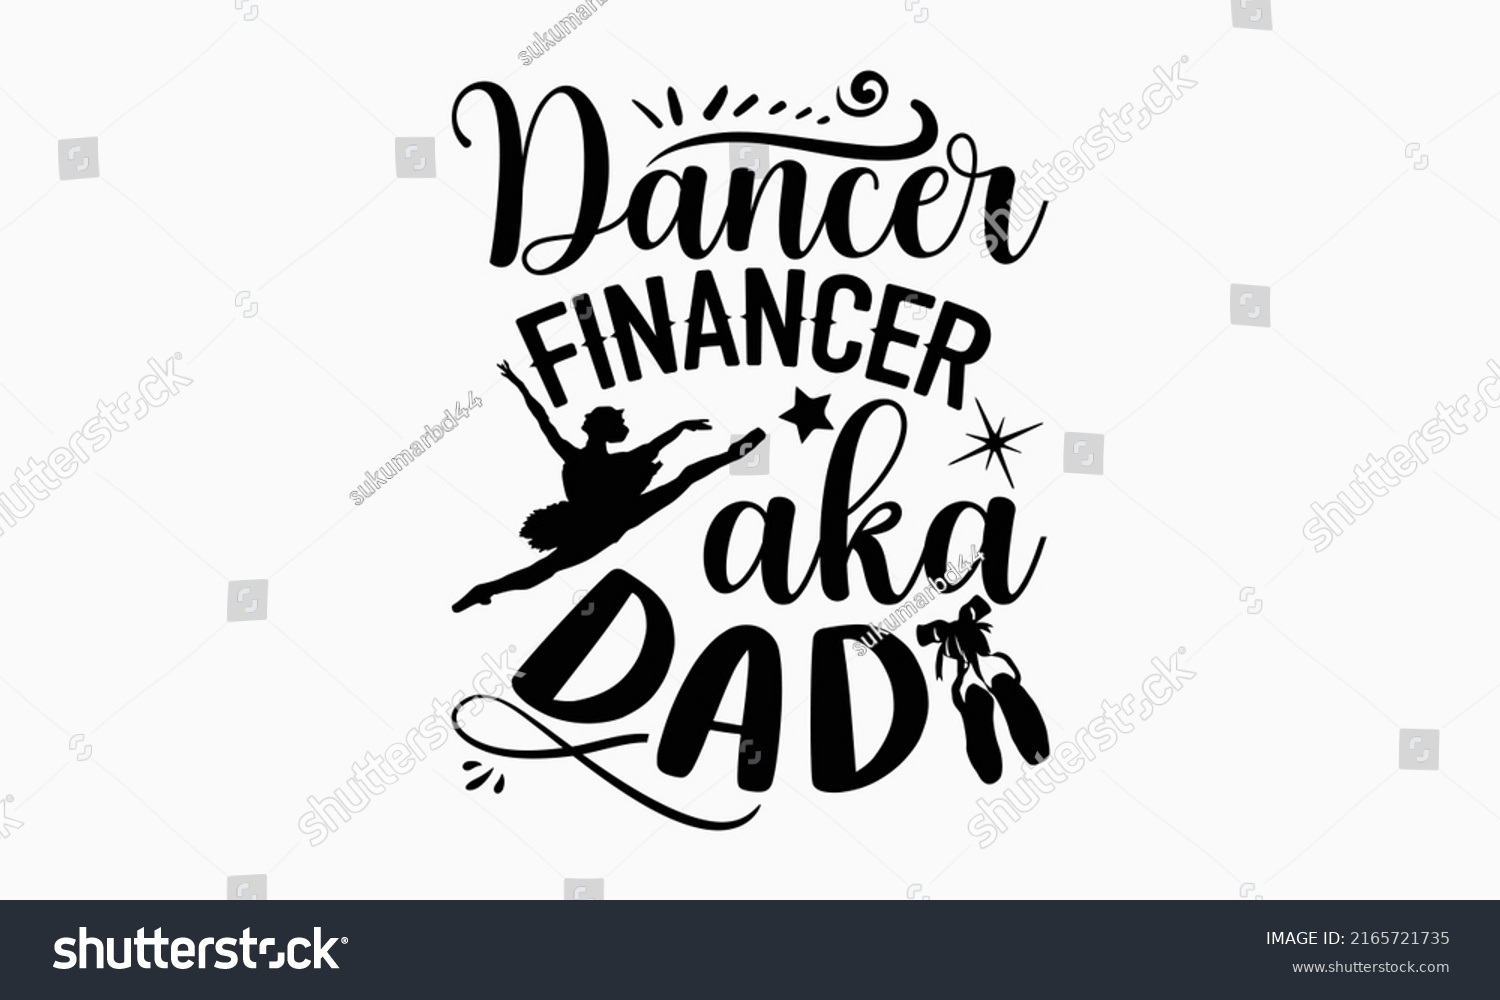 SVG of Dancer financer aka dad - Ballet t shirt design, SVG Files for Cutting, Handmade calligraphy vector illustration, Hand written vector sign, EPS svg